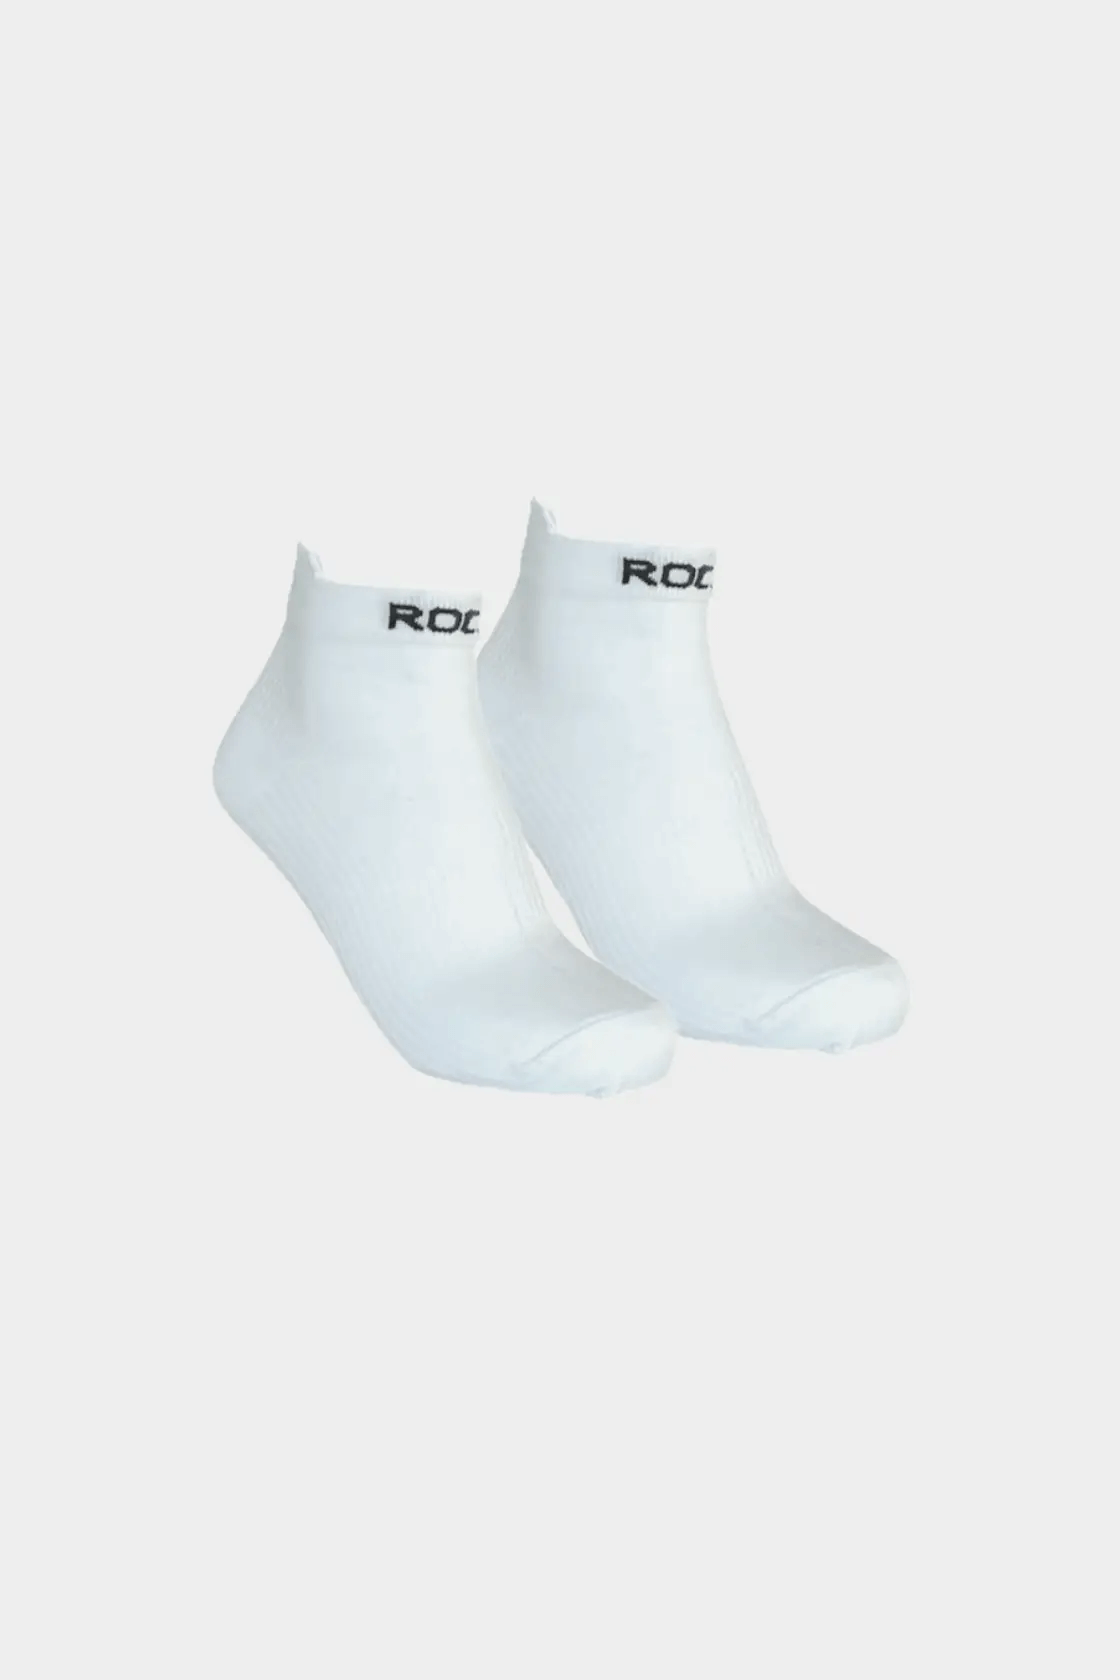 Rocca Sock White Ankle Compression Socks